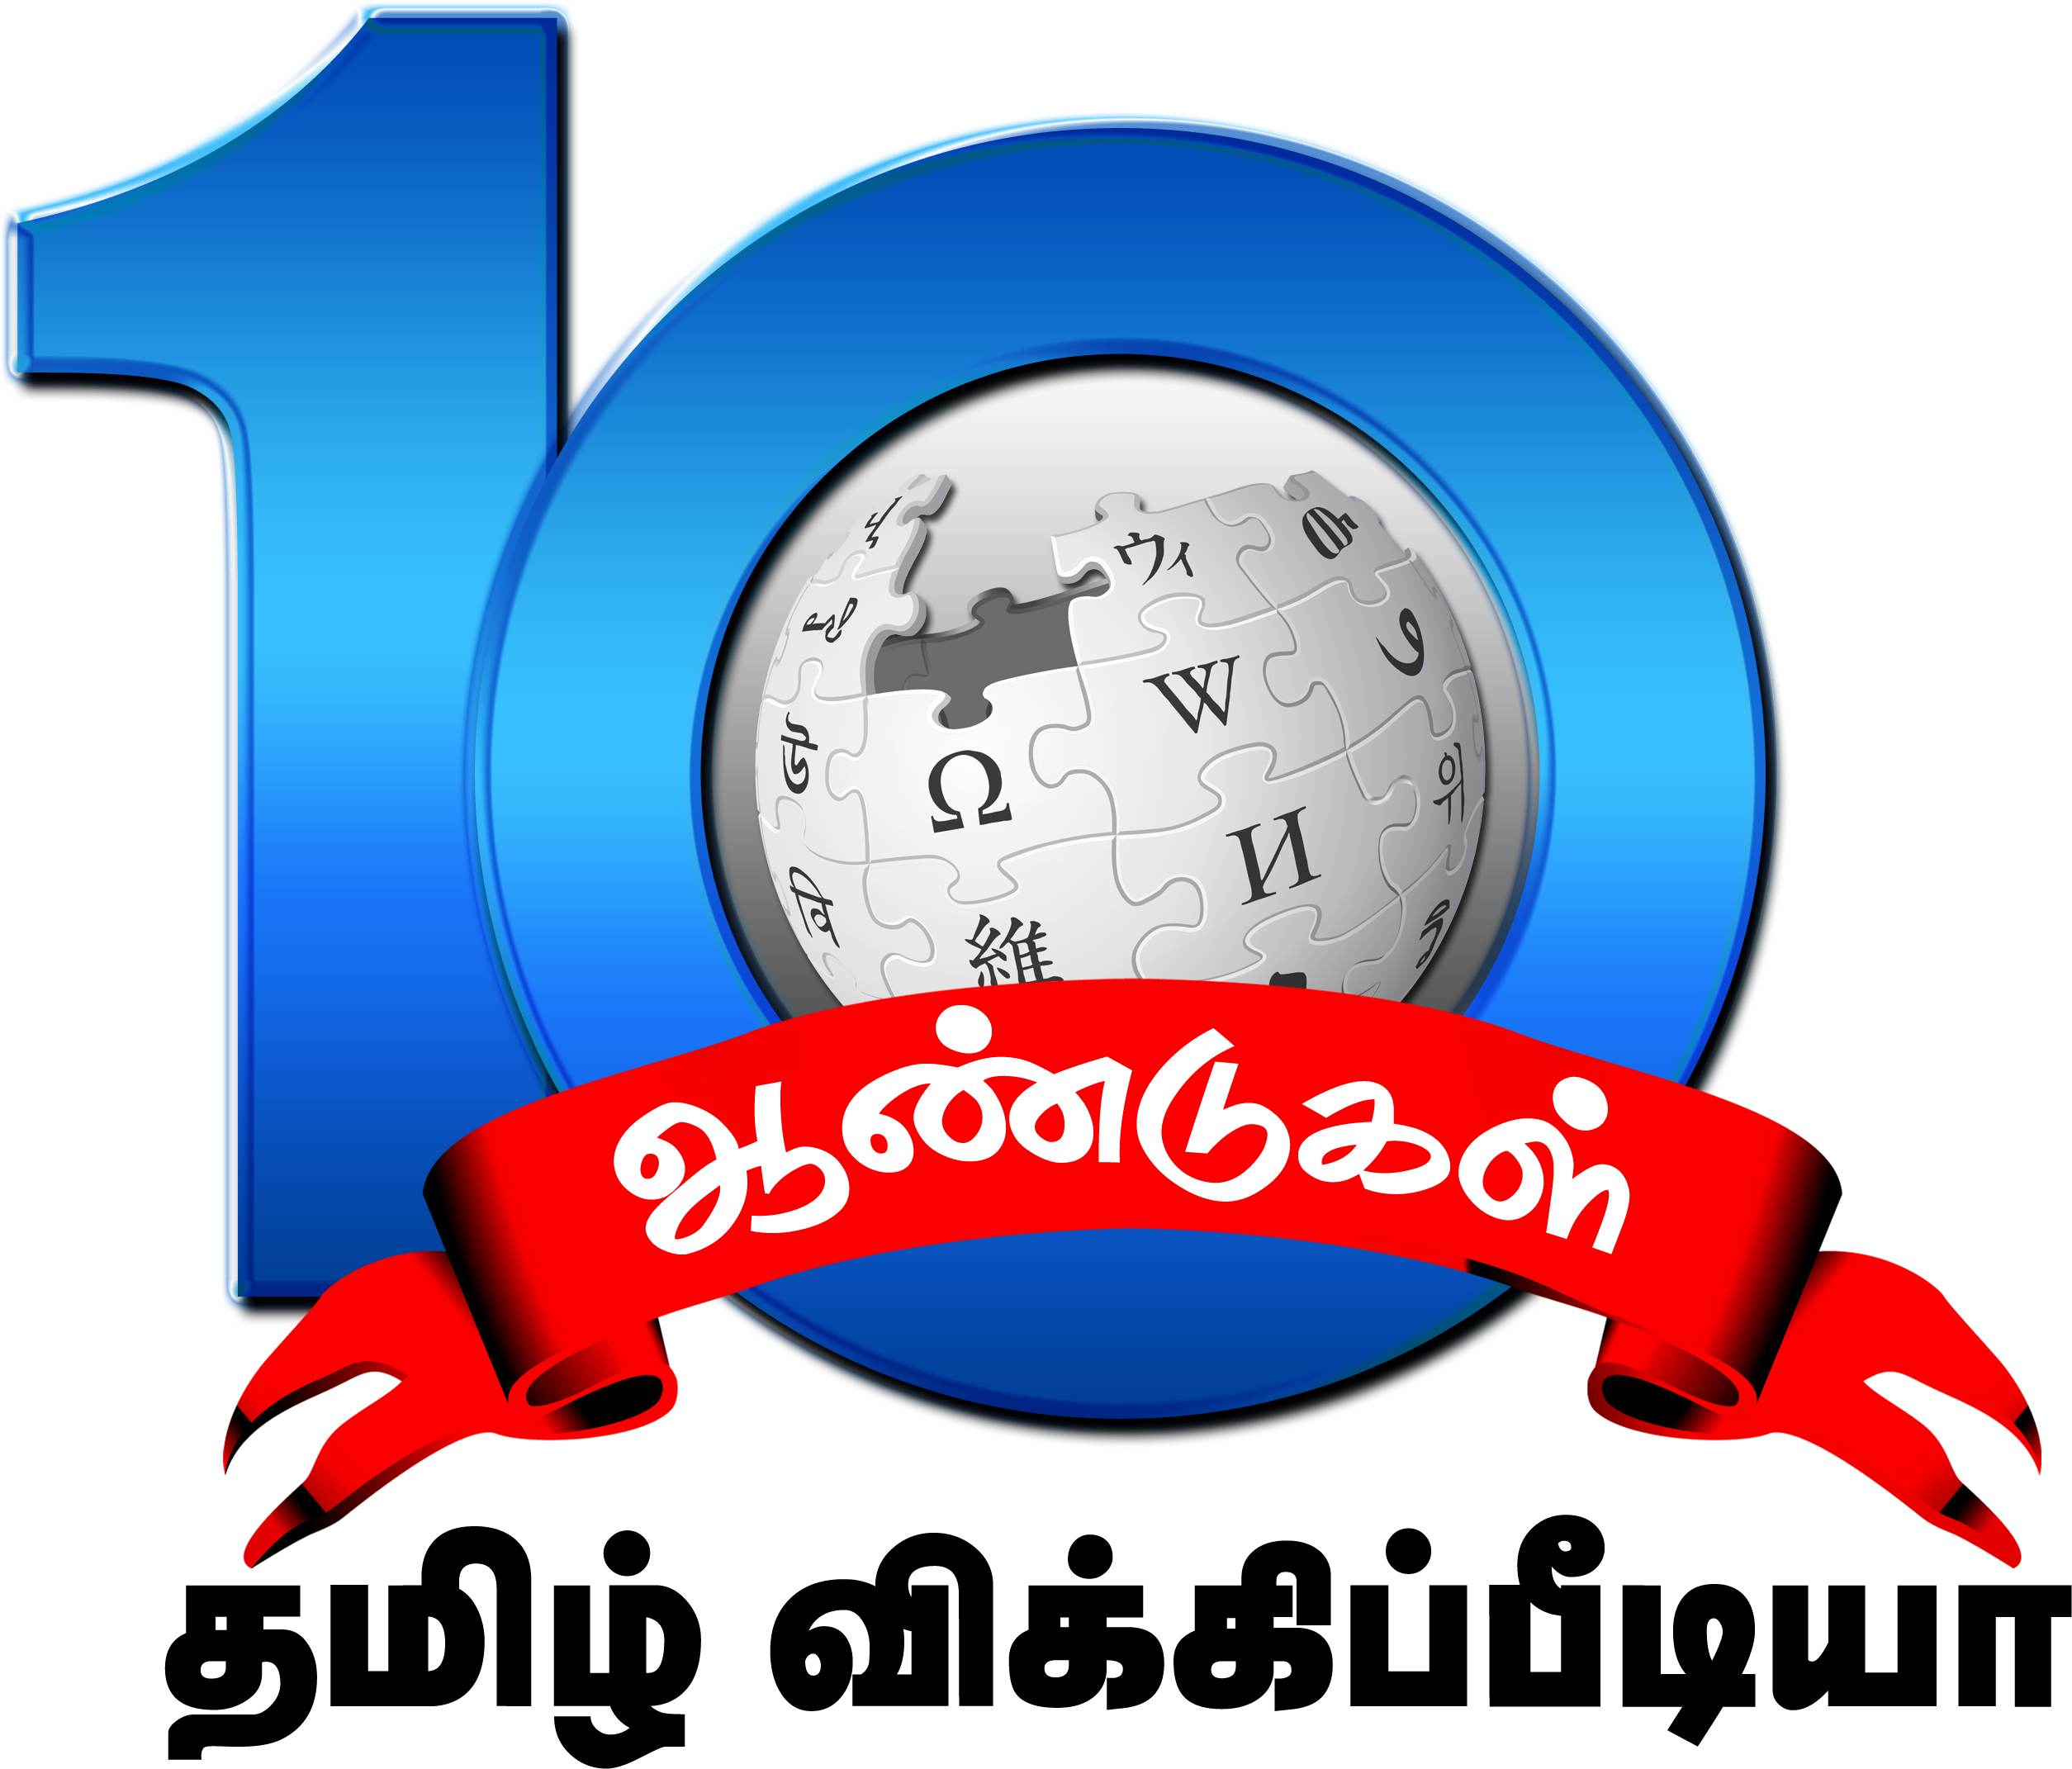 Tamil Wiki 10th Anniversary Logo - Tamzh Azhakial (essays In Tamil Aesthetics) (2778x2256)